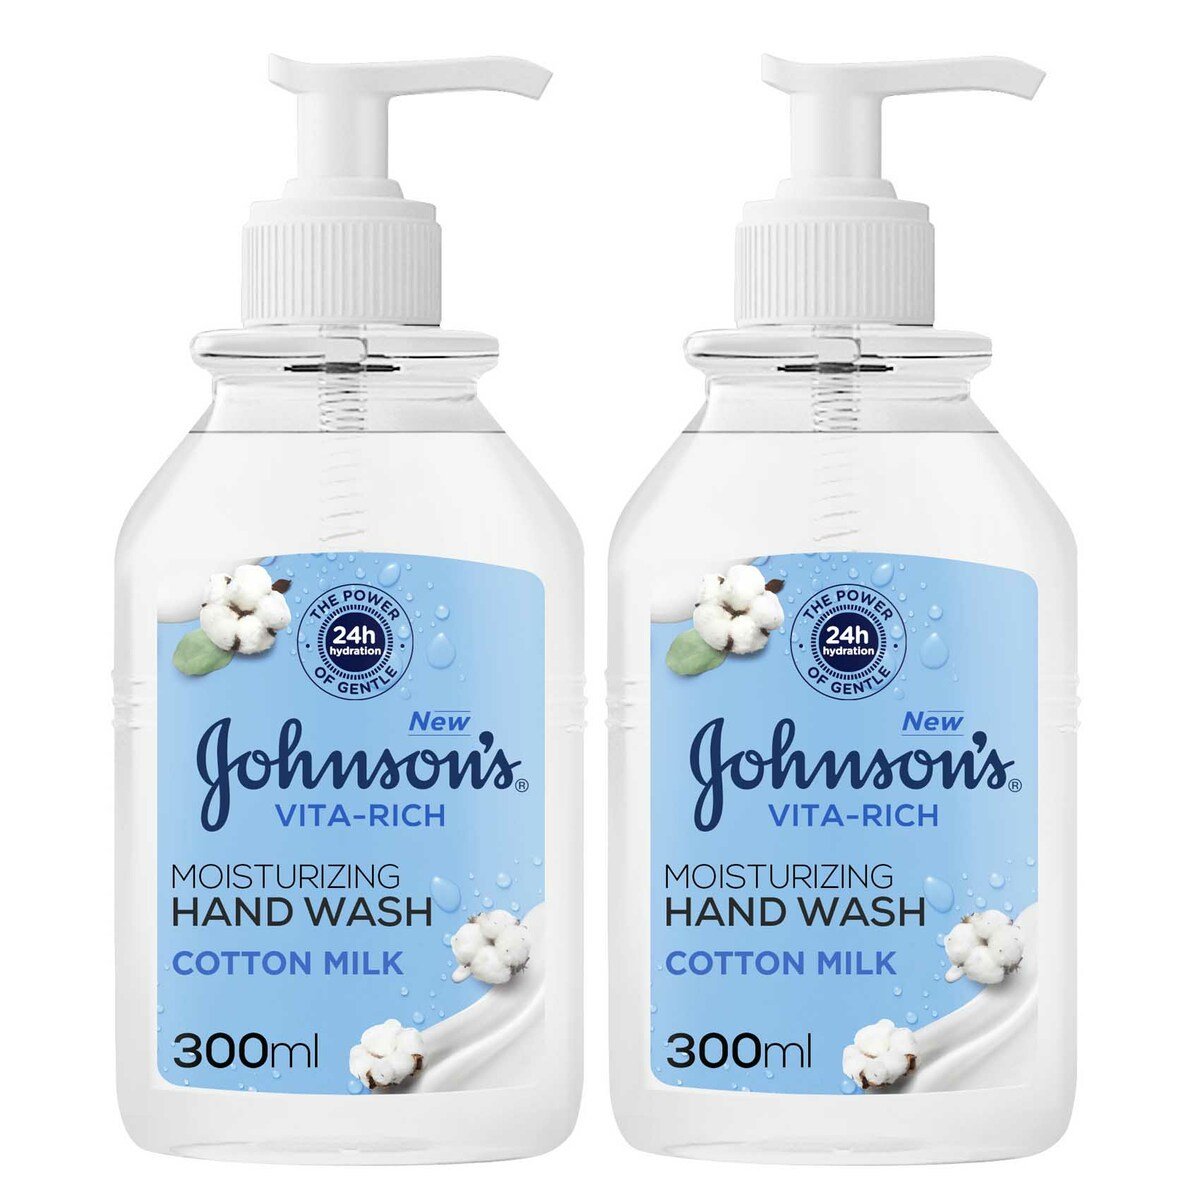 Johnson's Hand Wash Vita Rich Moisturizing Cotton Milk 2 x 300 ml